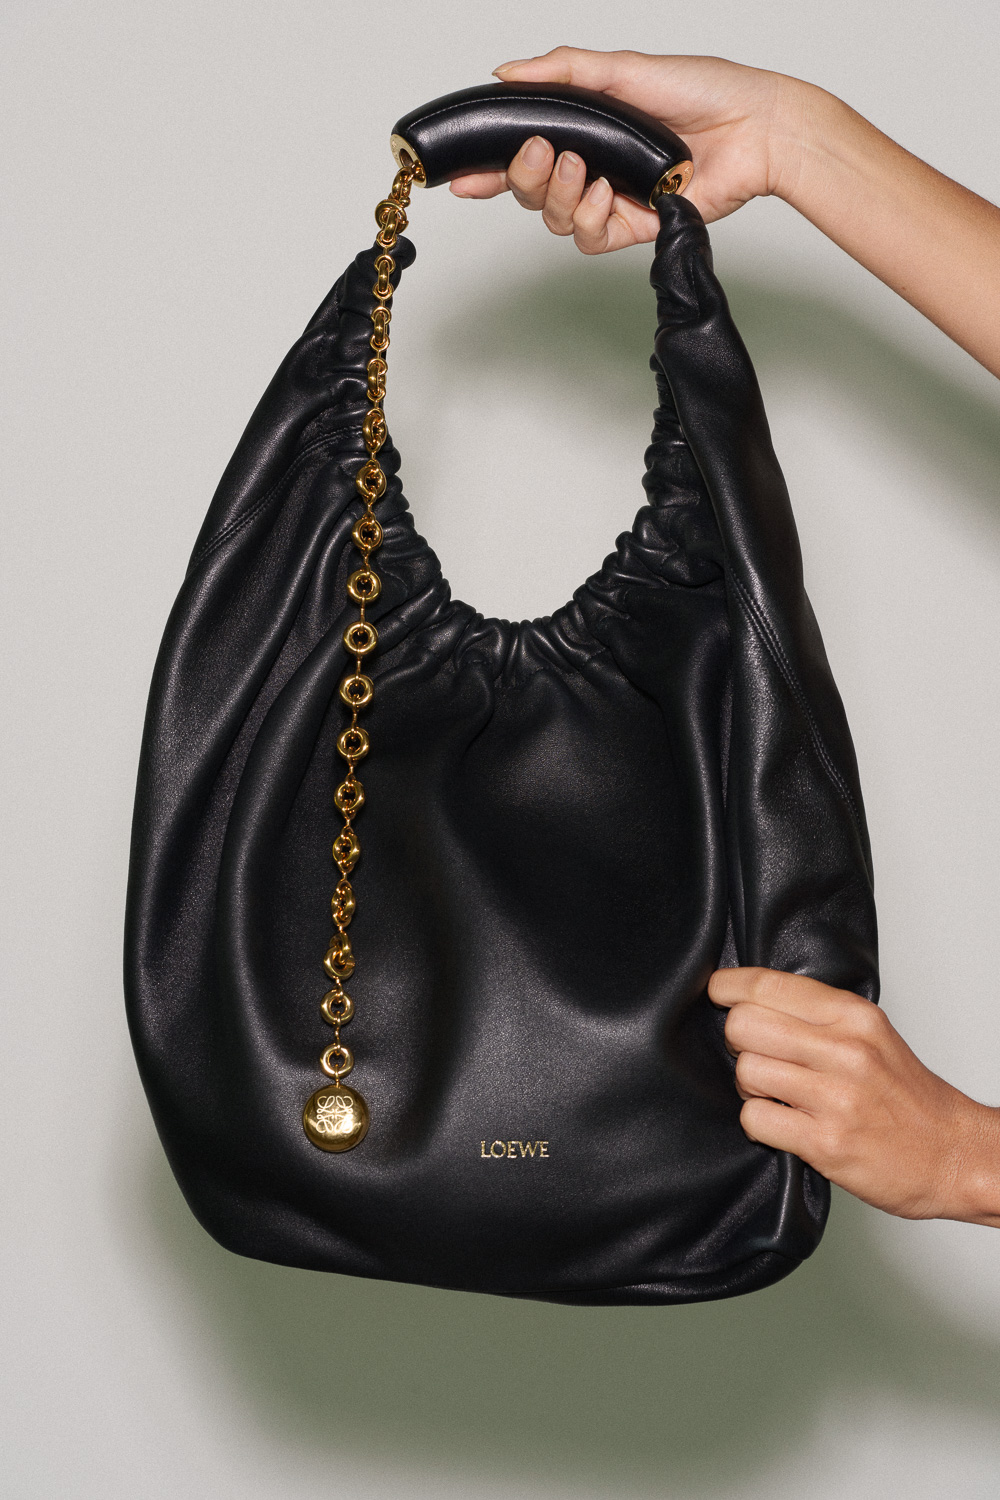 LOEWE Black Leather Shoulder Bag - Purchased in Japan